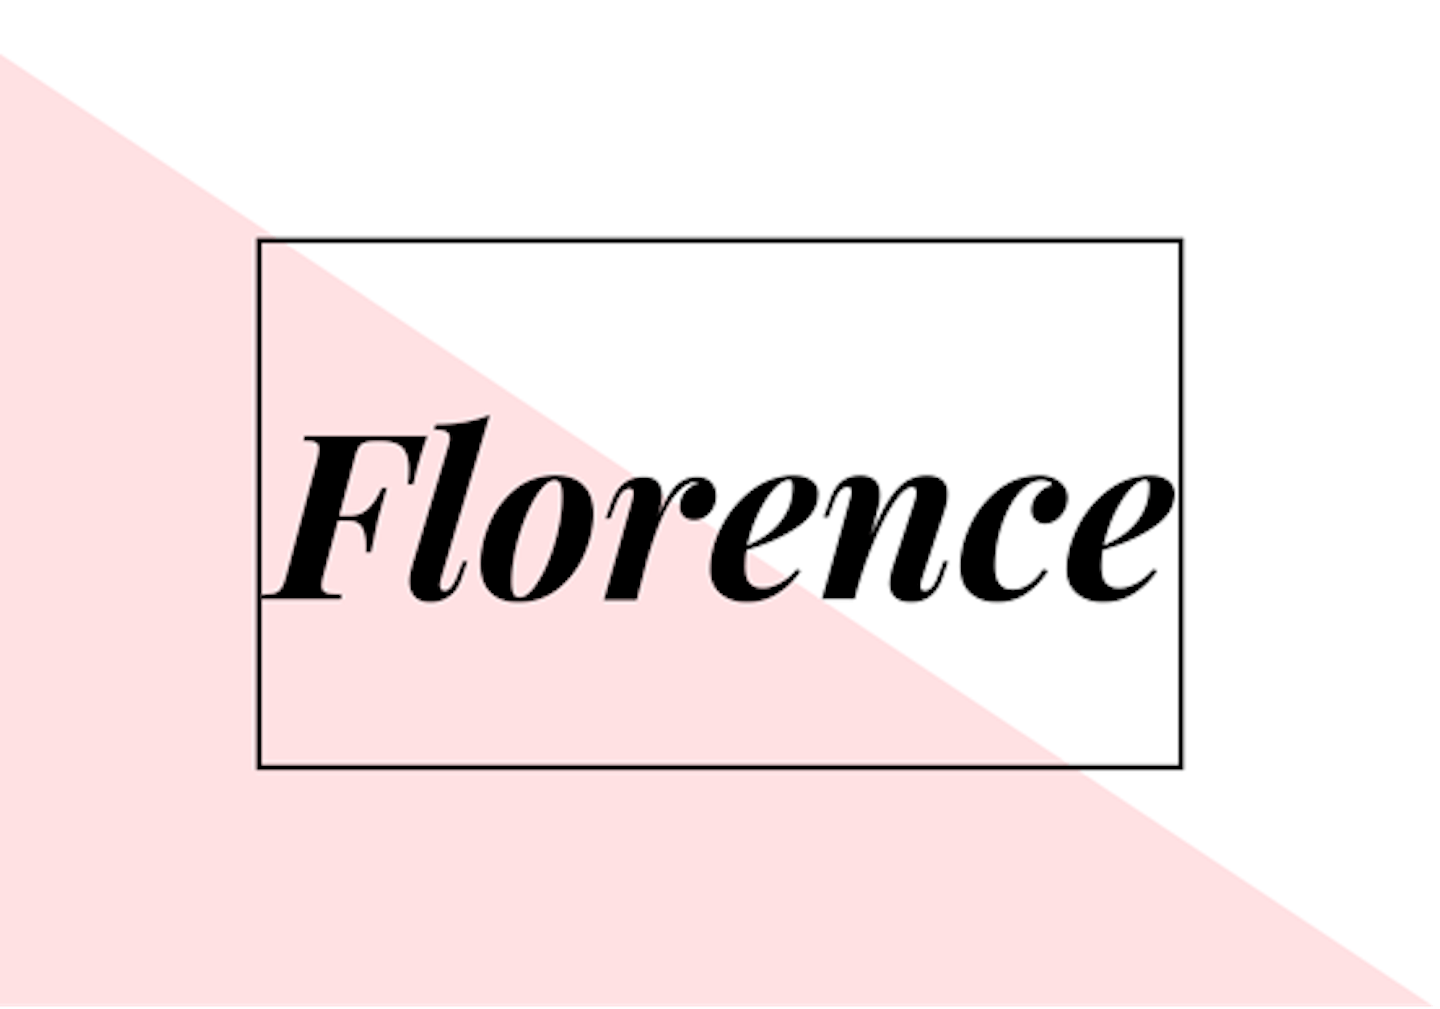 12) Florence